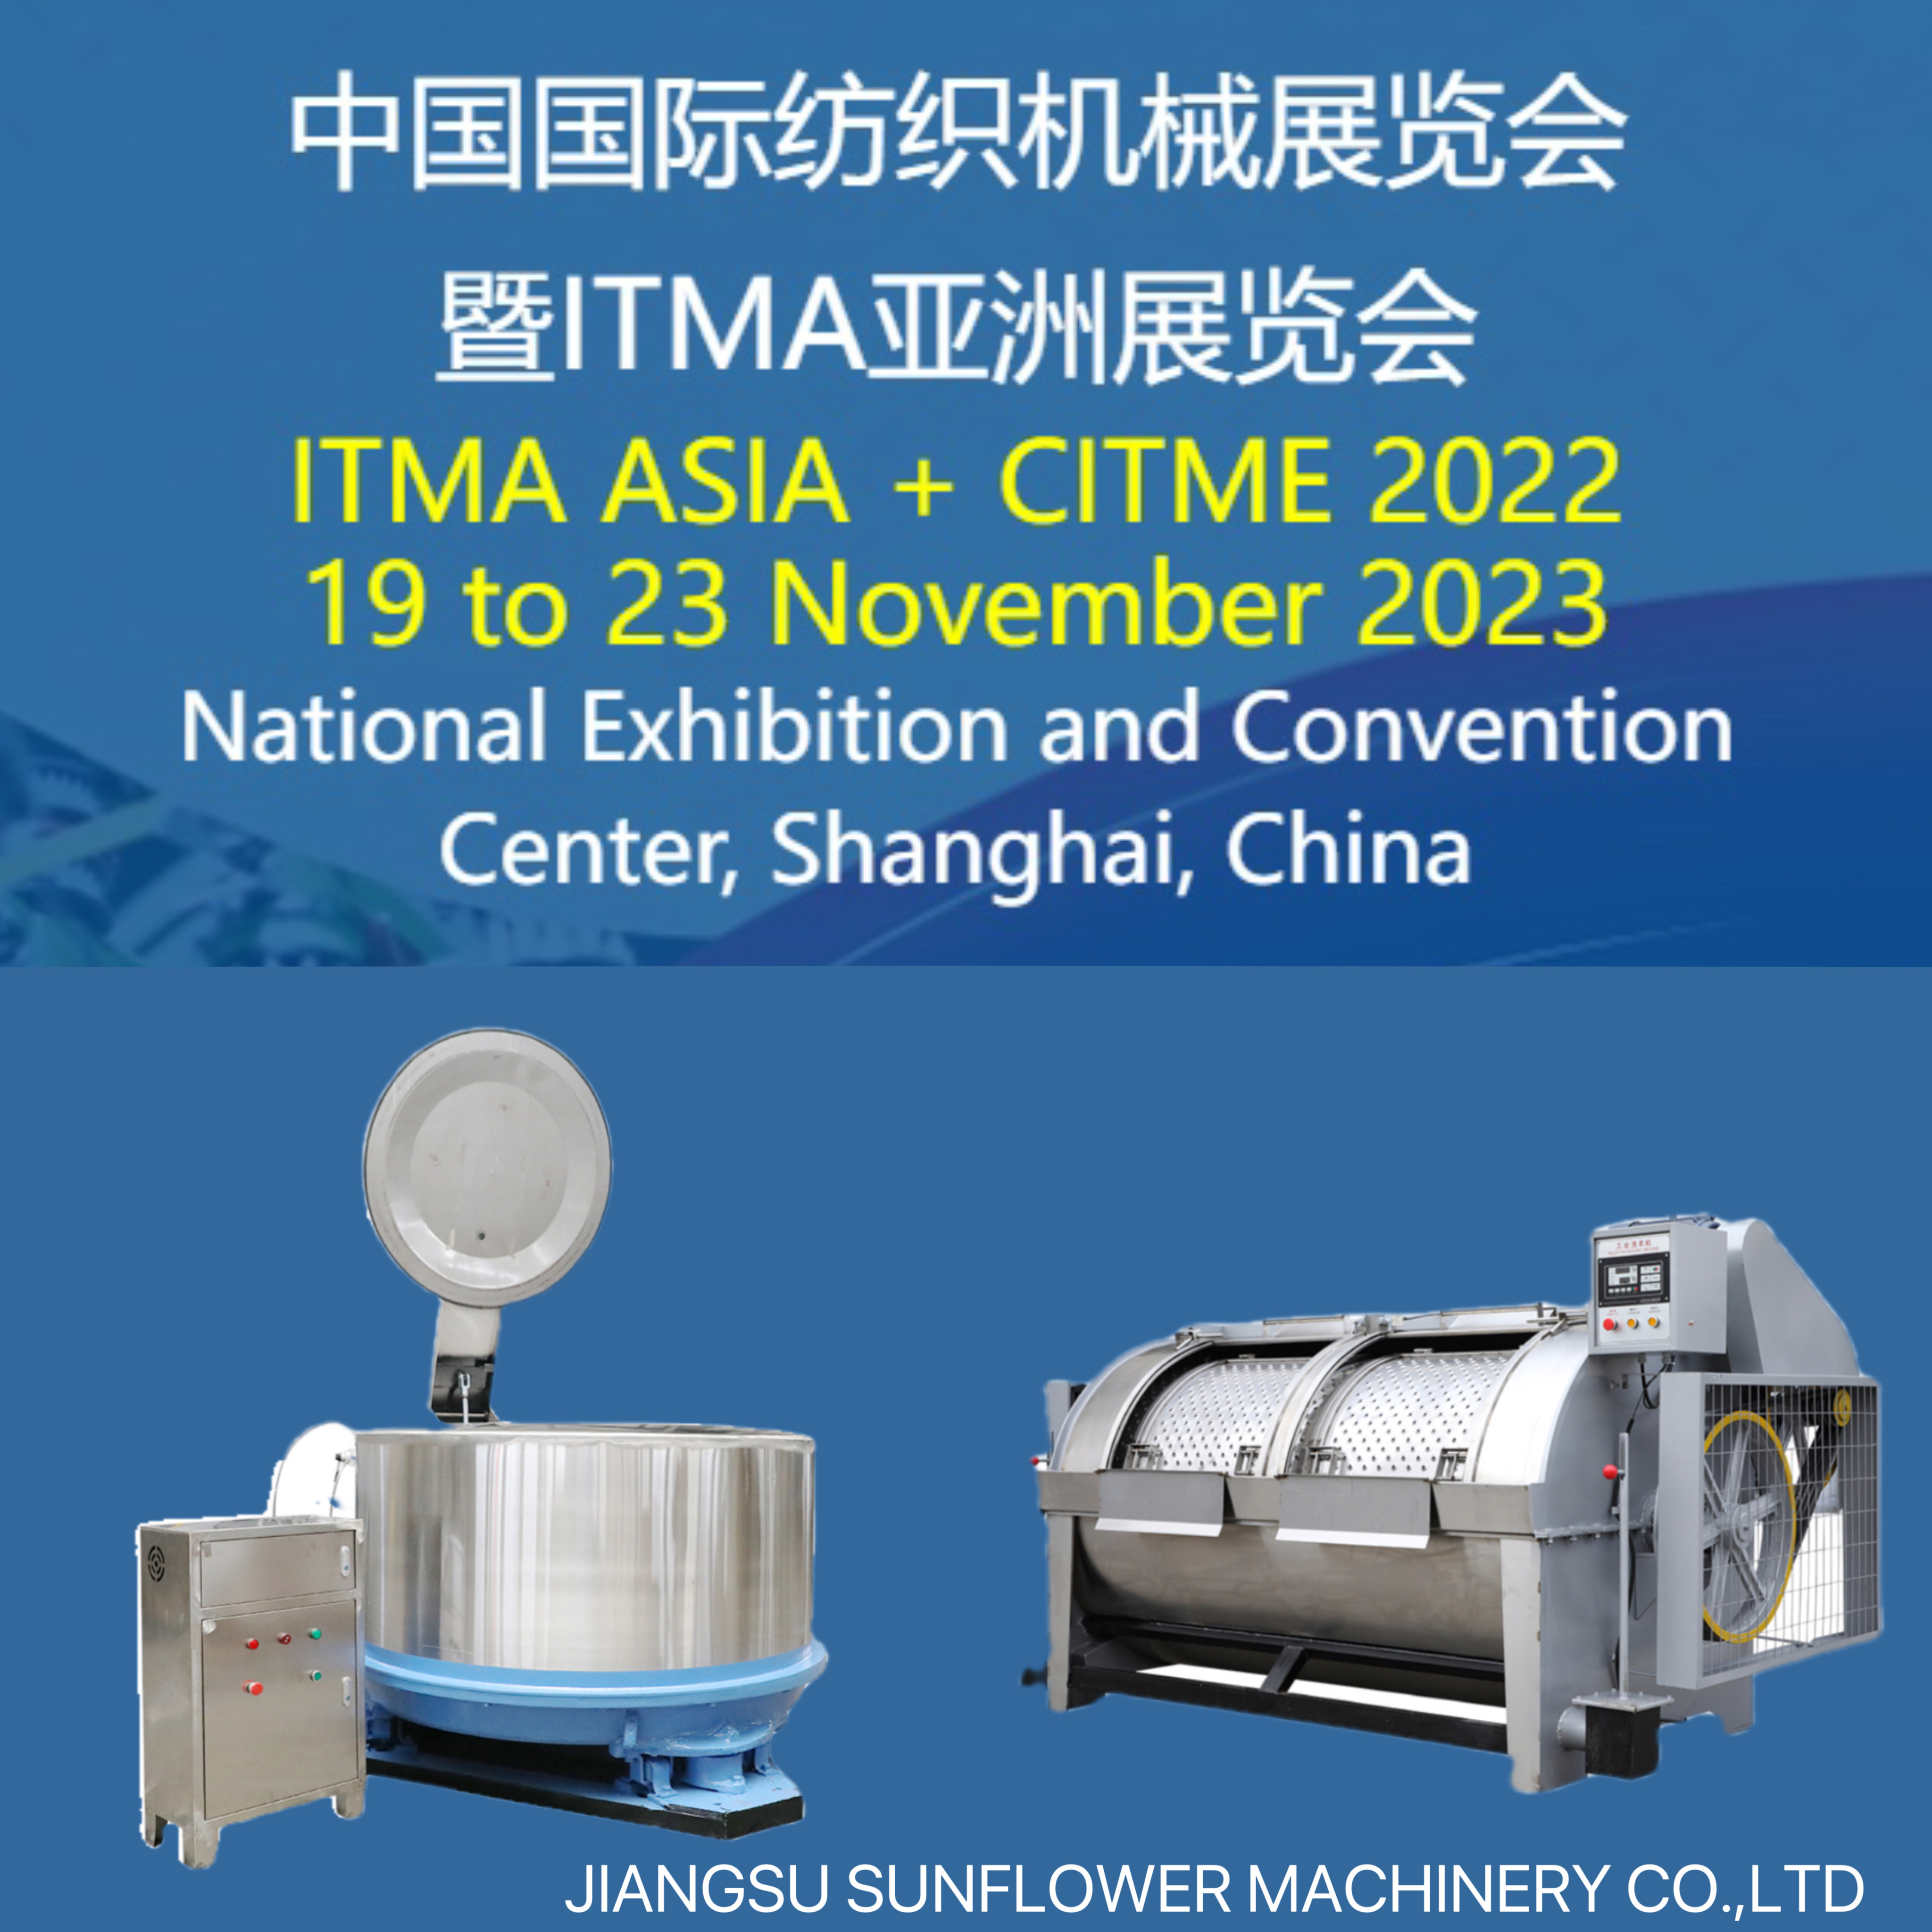 China International Textile Machinery Exhibition and ITMA Asia Exhibition (ITMA ASIA+CITME2022)